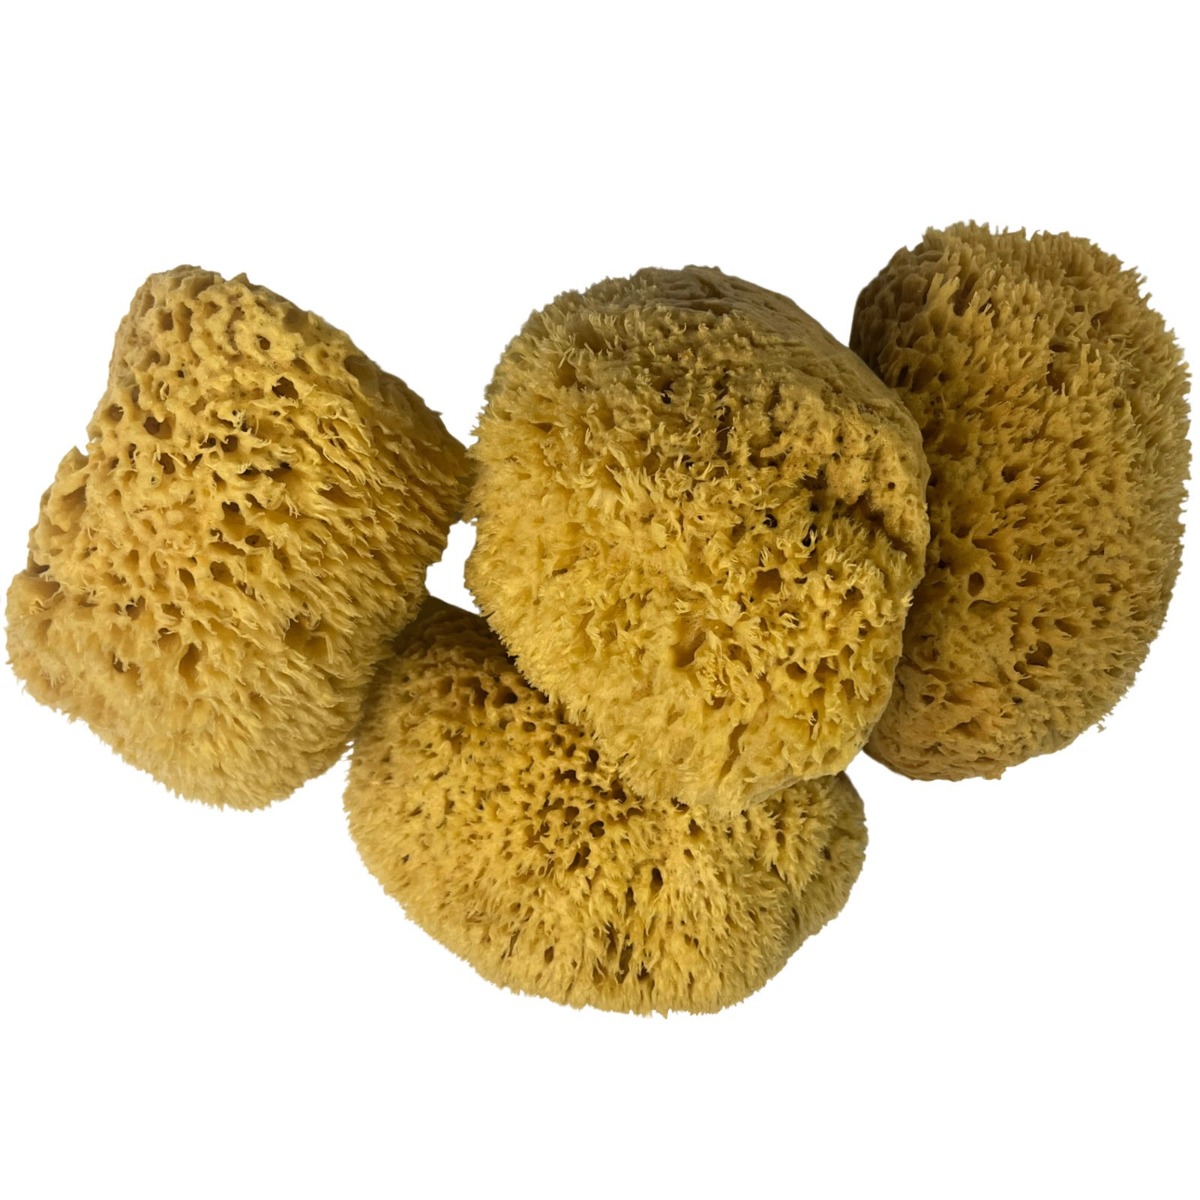 Florida Natural Sea Sponge (22-1M): Florida Natural Sponges